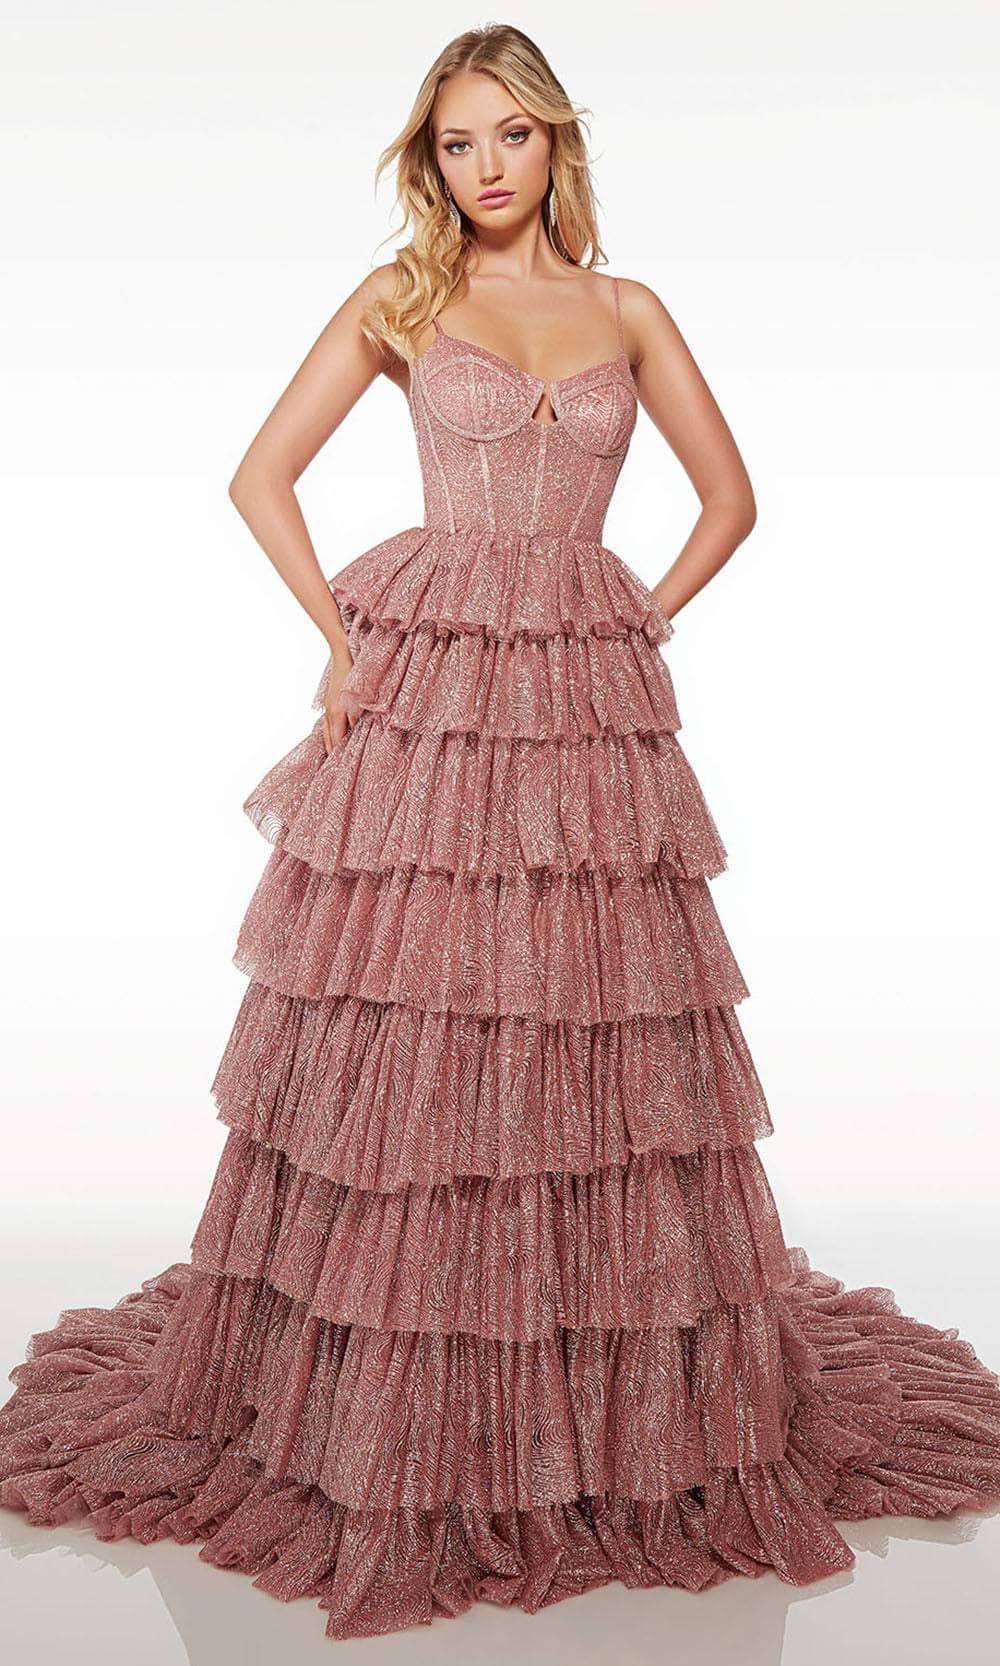 Alyce Paris 61526 - Sleeveless Corset Ballgown Special Occasion Dresses